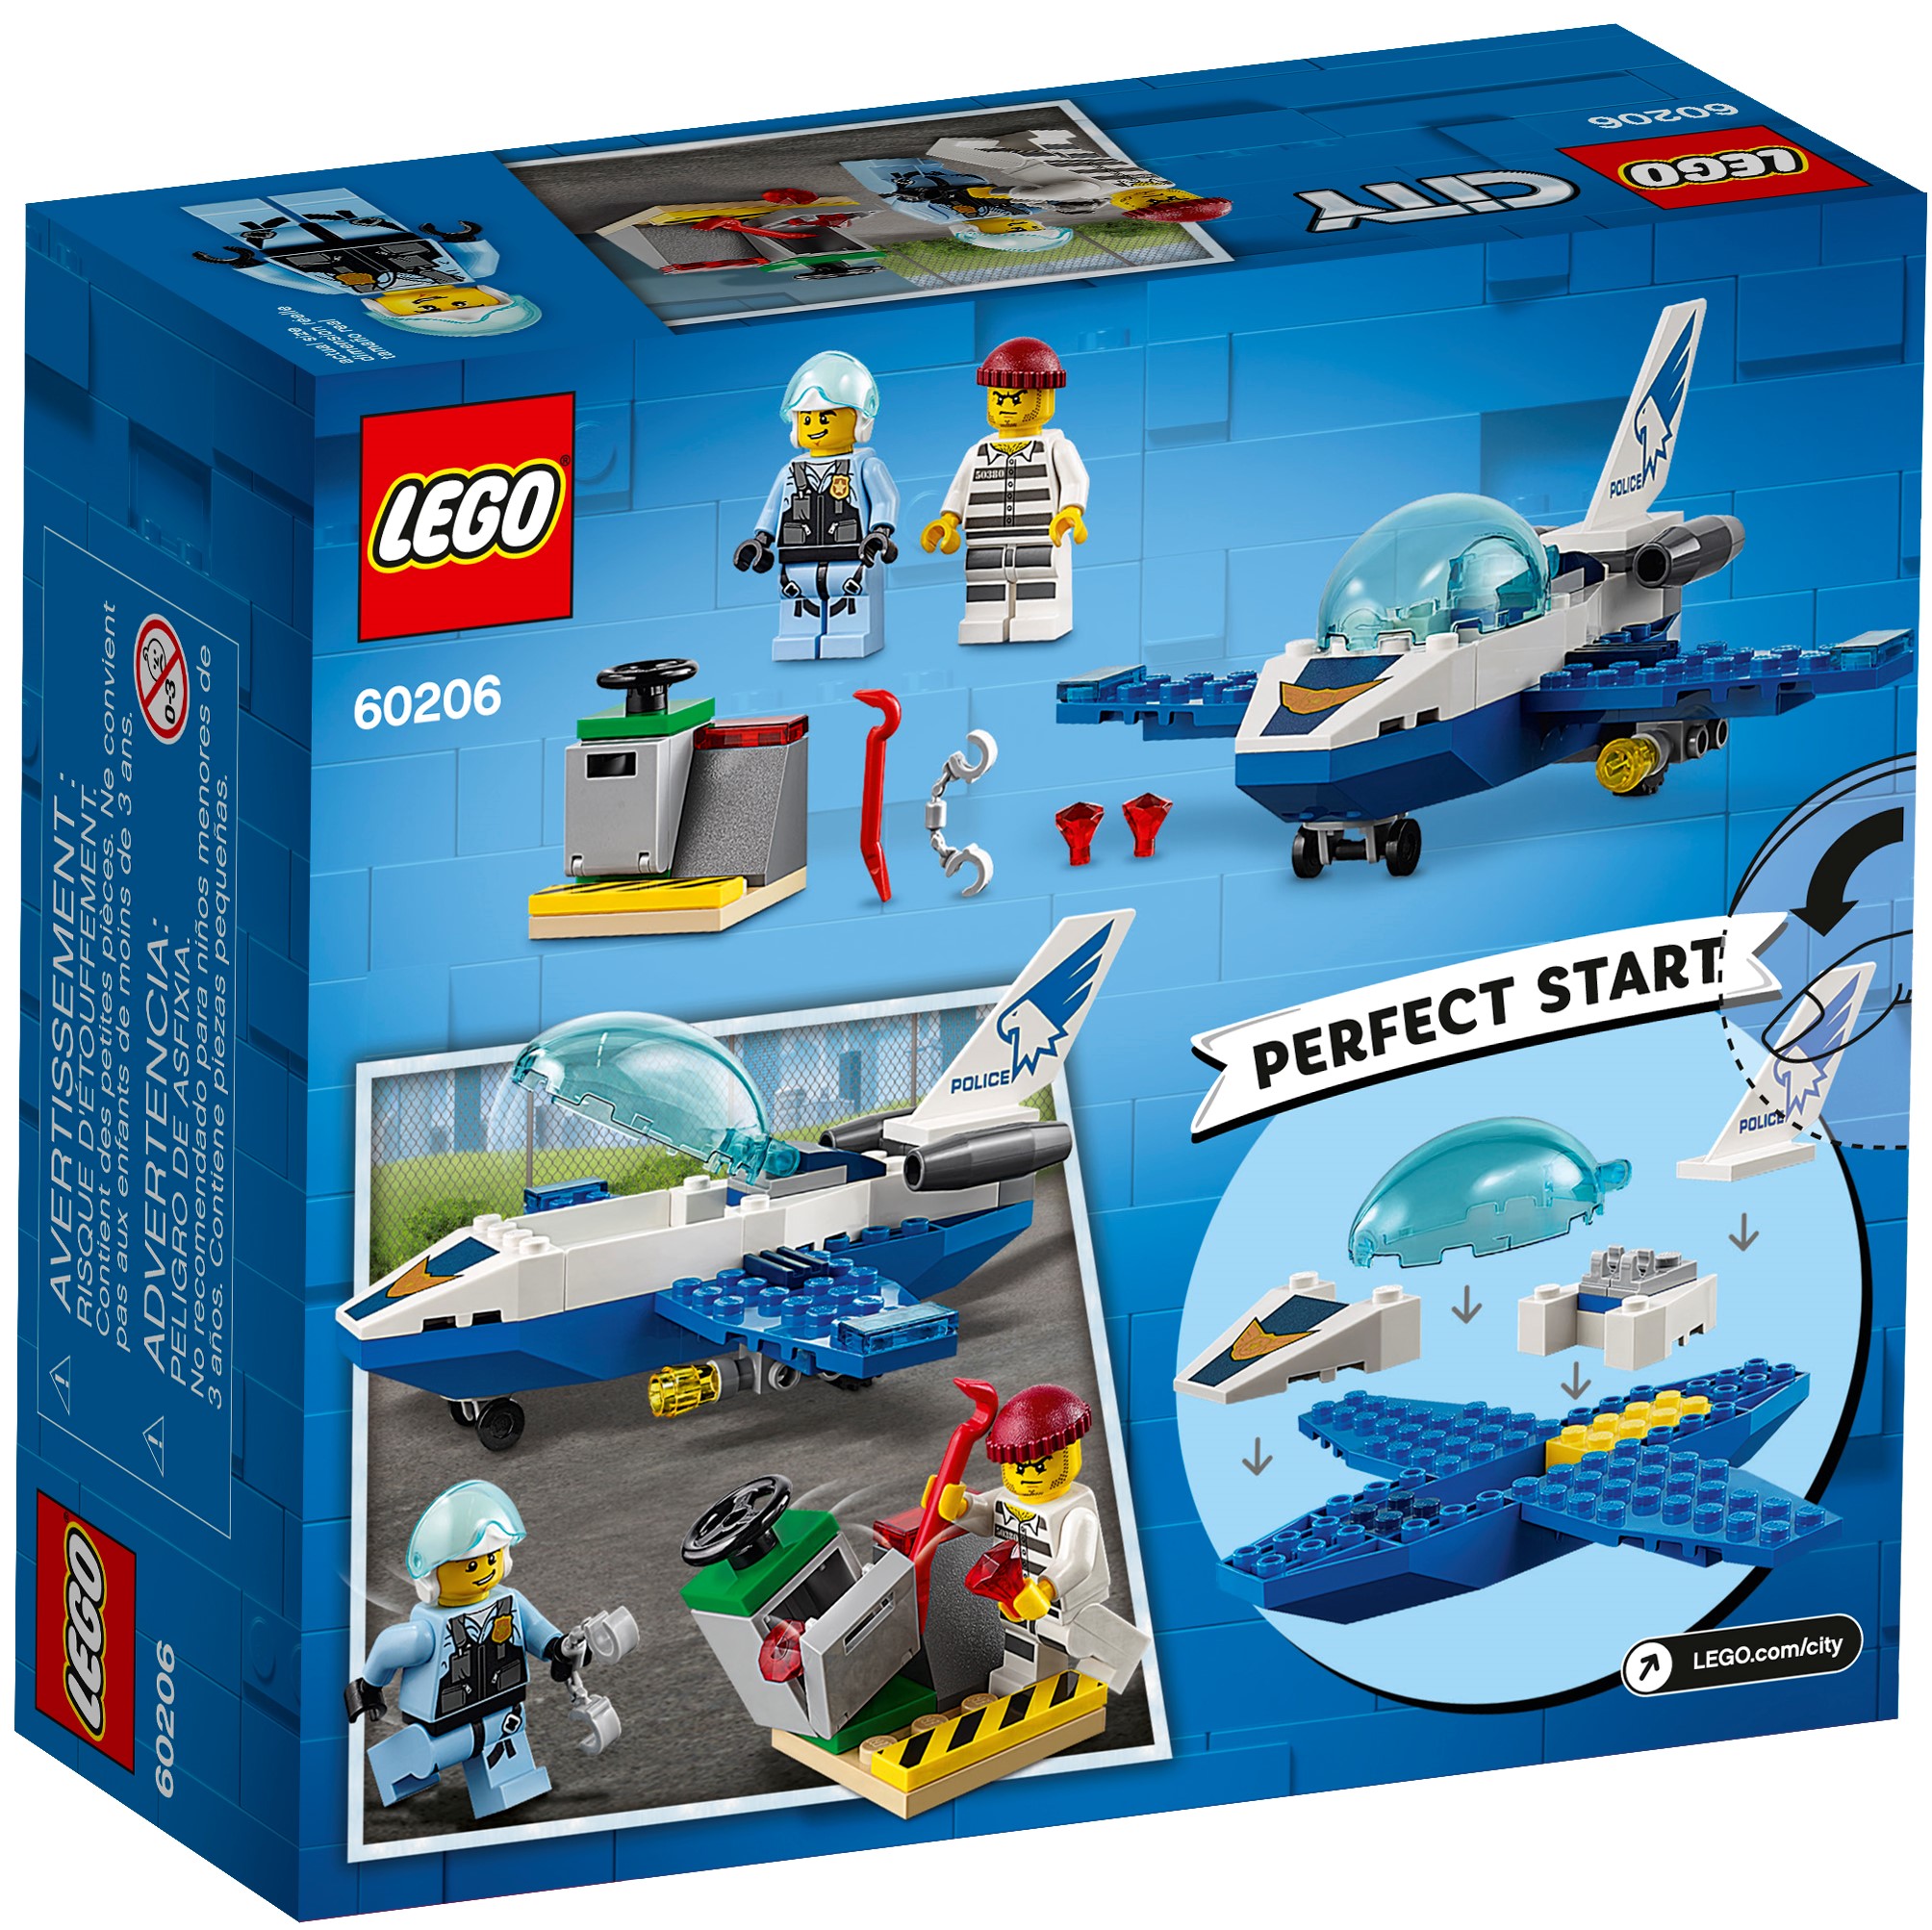 LEGO 60206 City Sky Police Jet Patrol Creative Role Play Kids Building Toy Set 